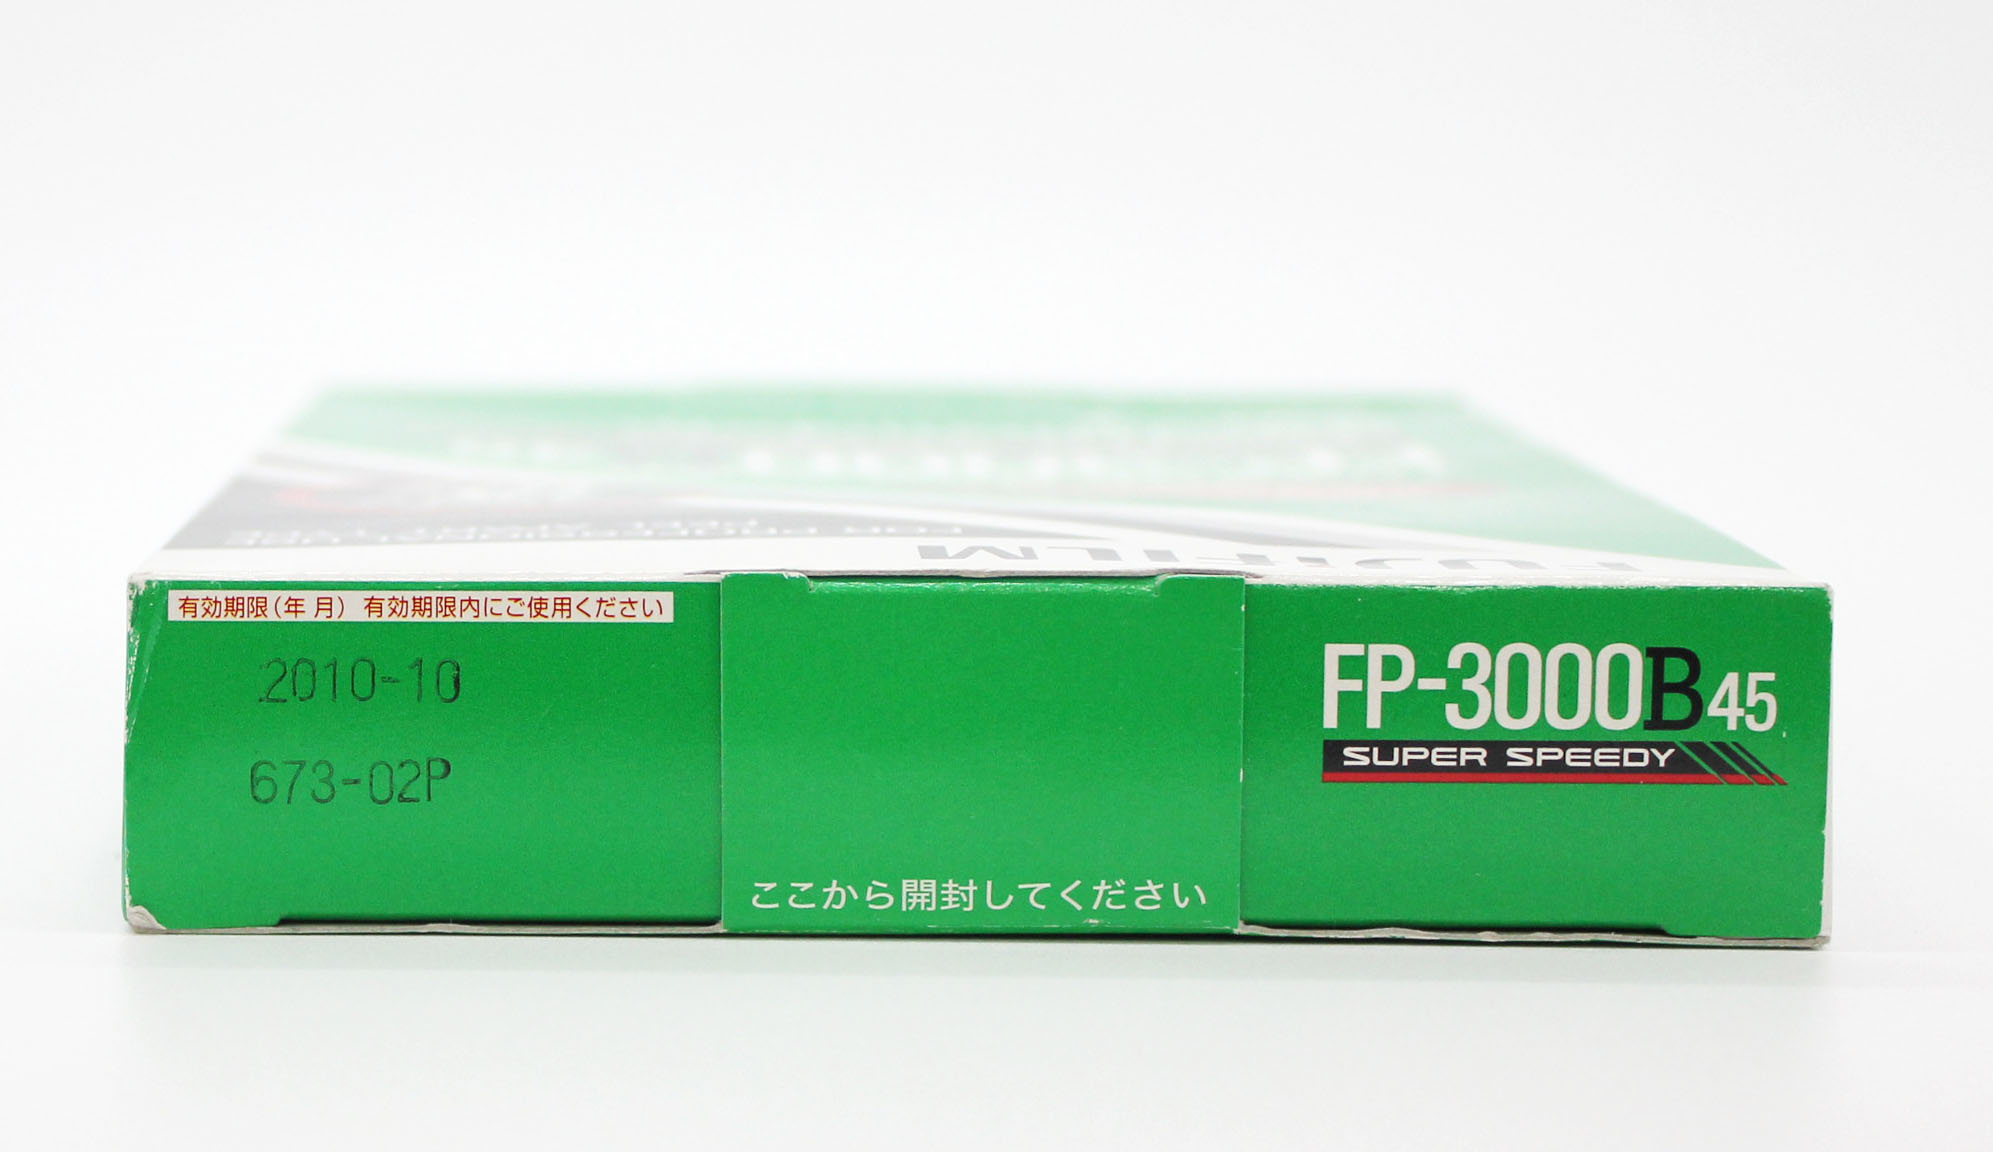  Fuji Fujifilm FP-3000B45 4x5 8.9x11.8cm Instant Black & White Film (EXP 10/2010) from Japan Photo 3